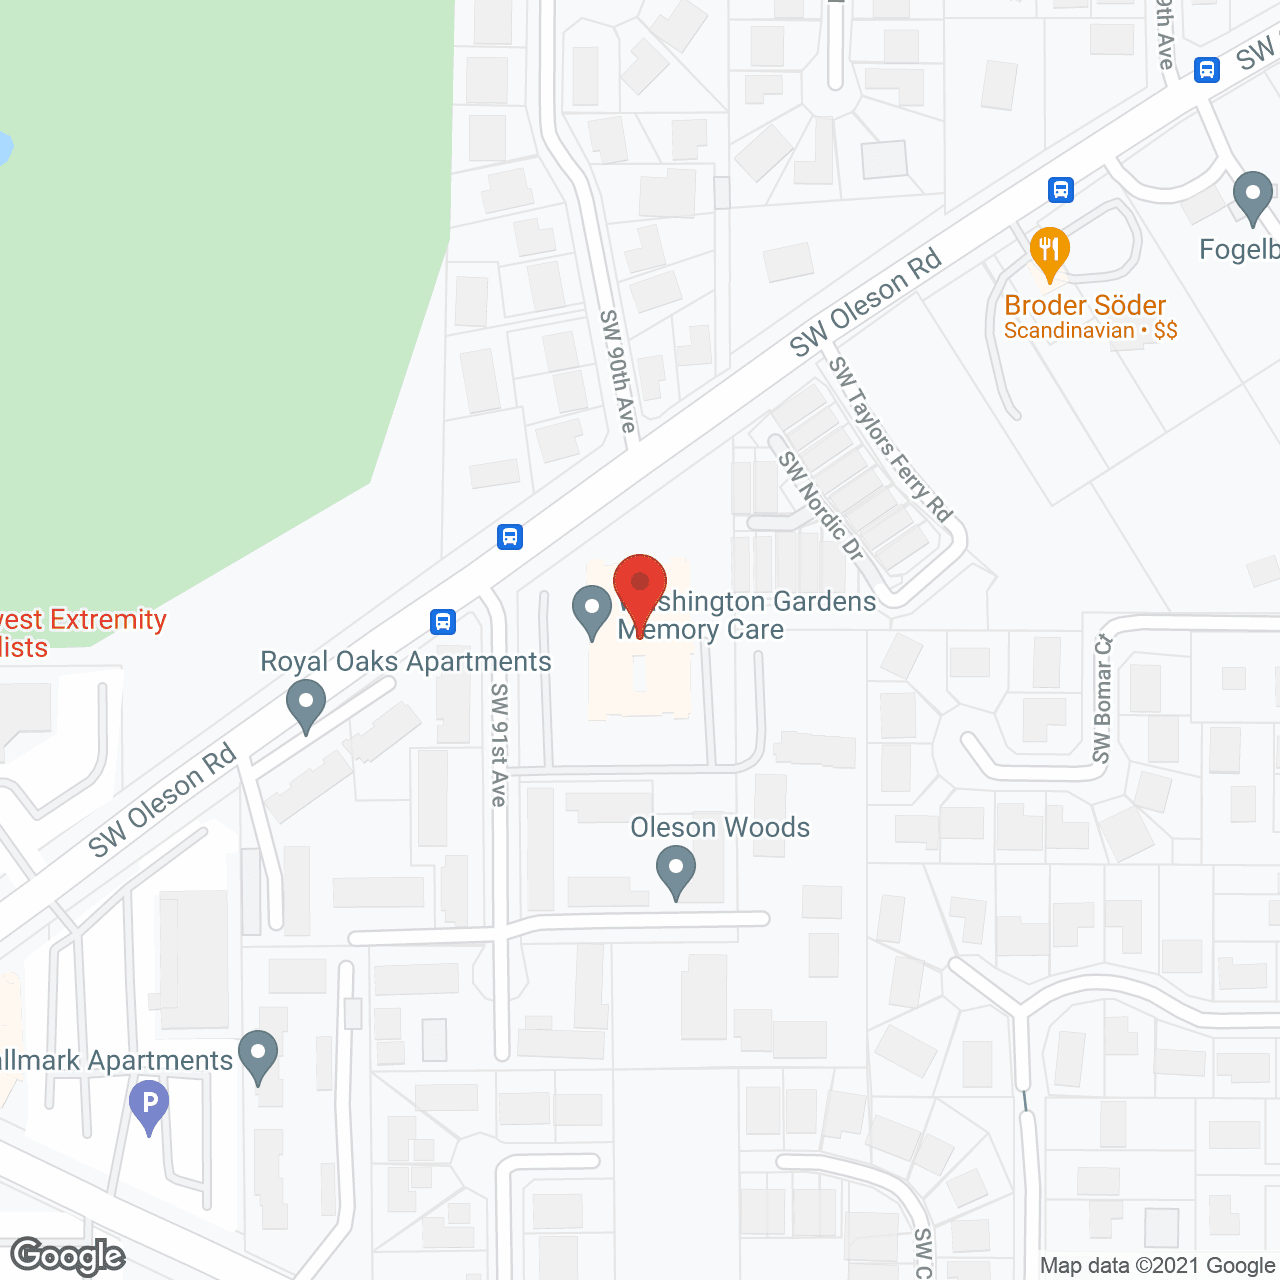 Washington Gardens Memory Care Community in google map